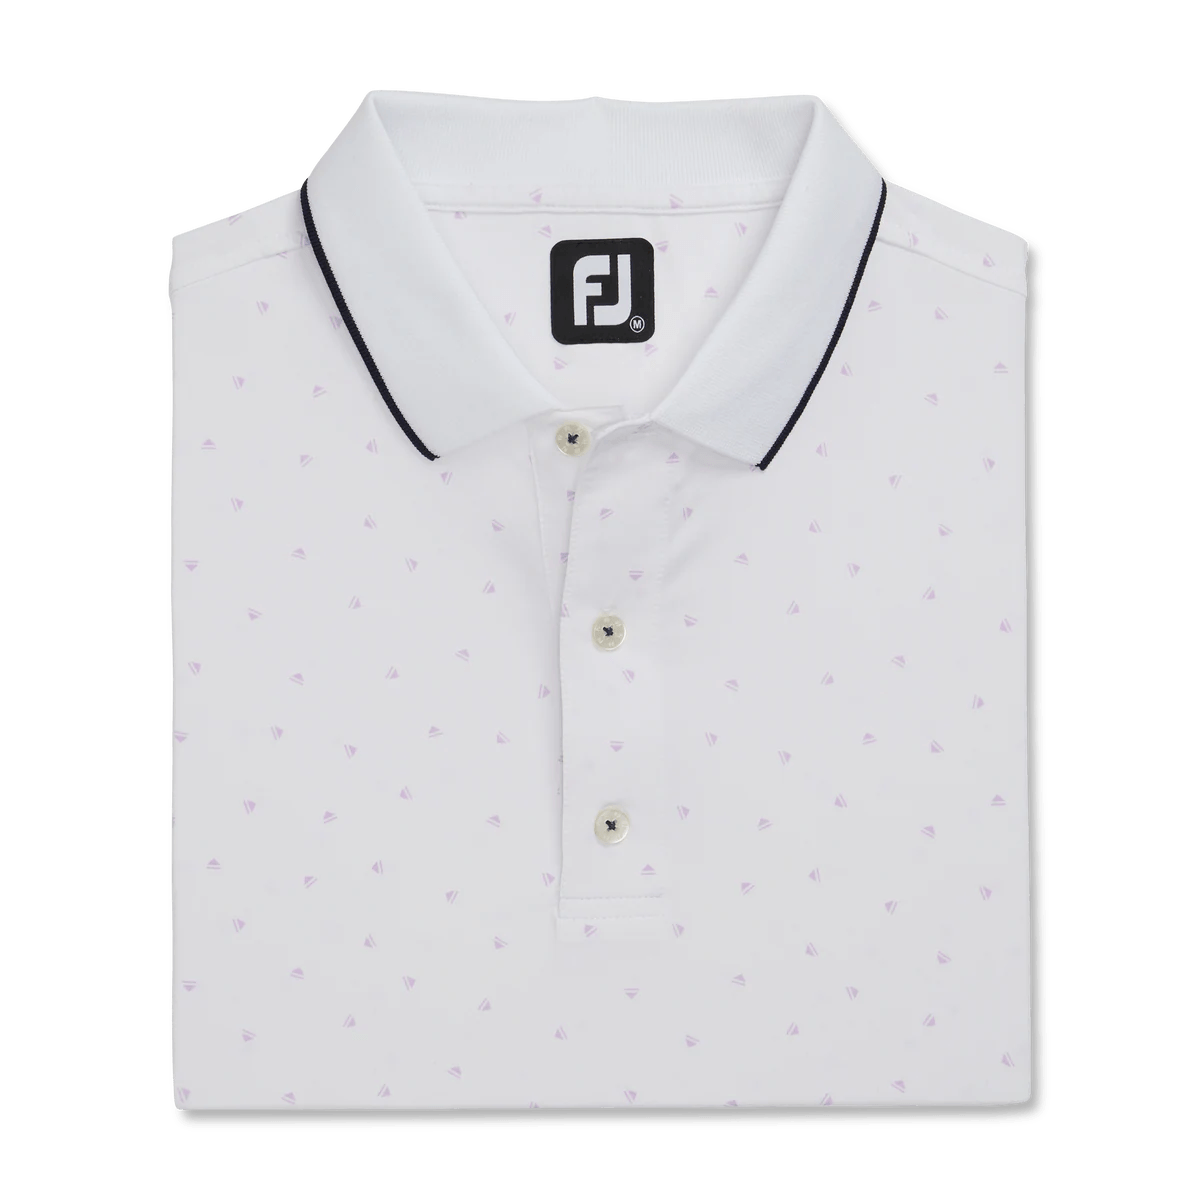 FootJoy Push Play Print Men’s polo - Niagara Golf Warehouse FOOTJOY Men's Golf Shirt